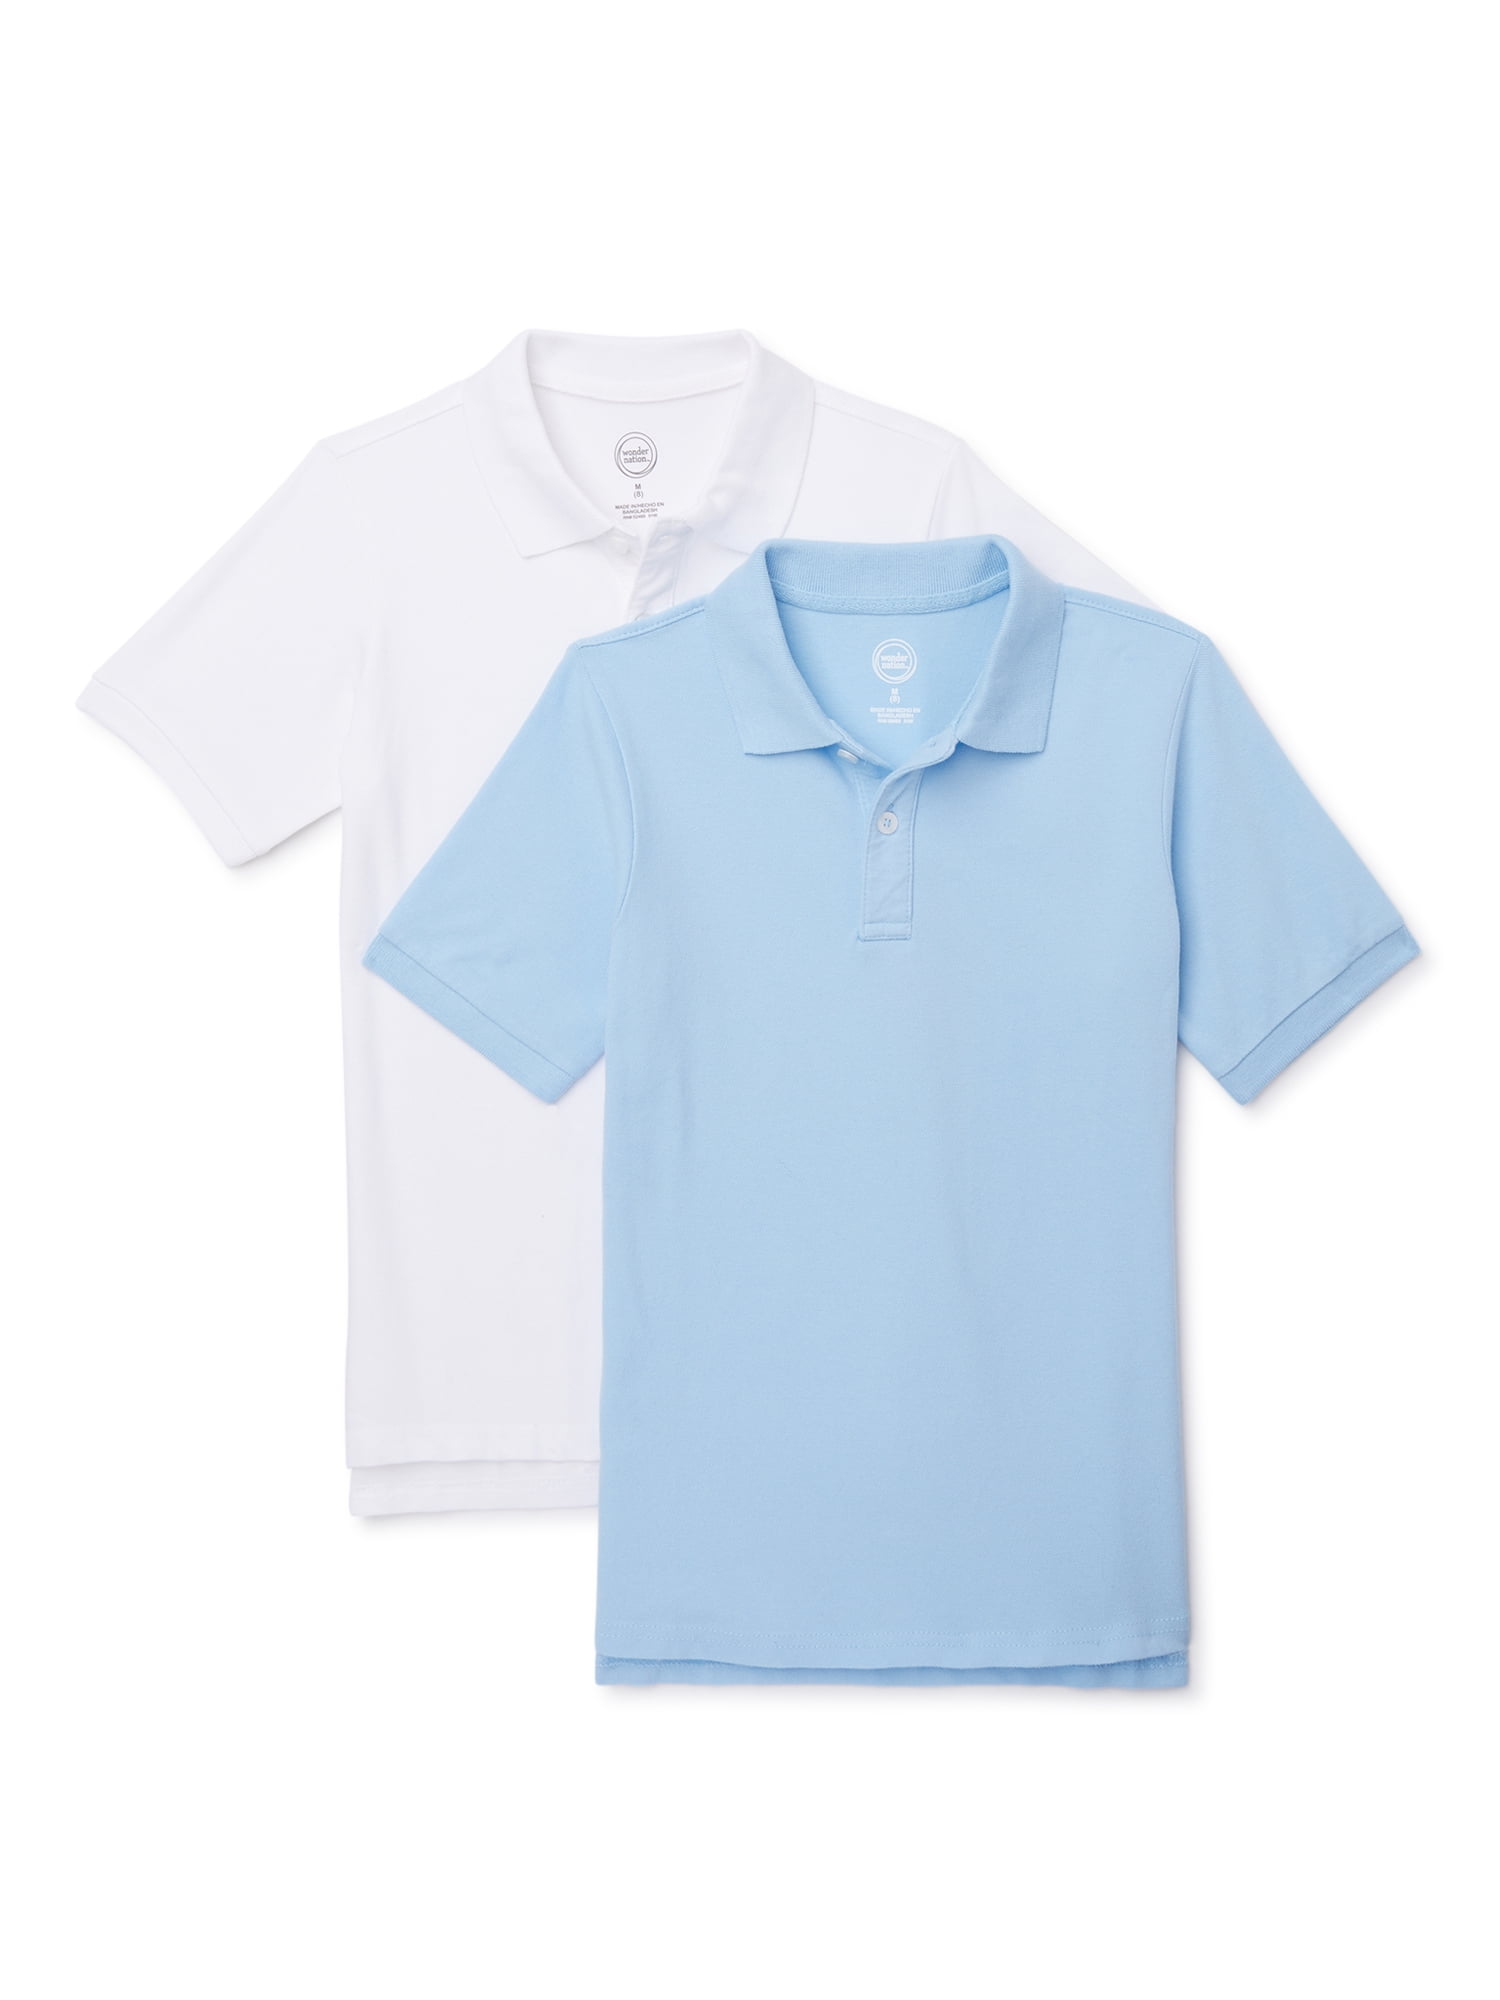 Fruit of the Loom Kids Uniform Short Sleeve Poloshirt Casual School Wear T Shirt 